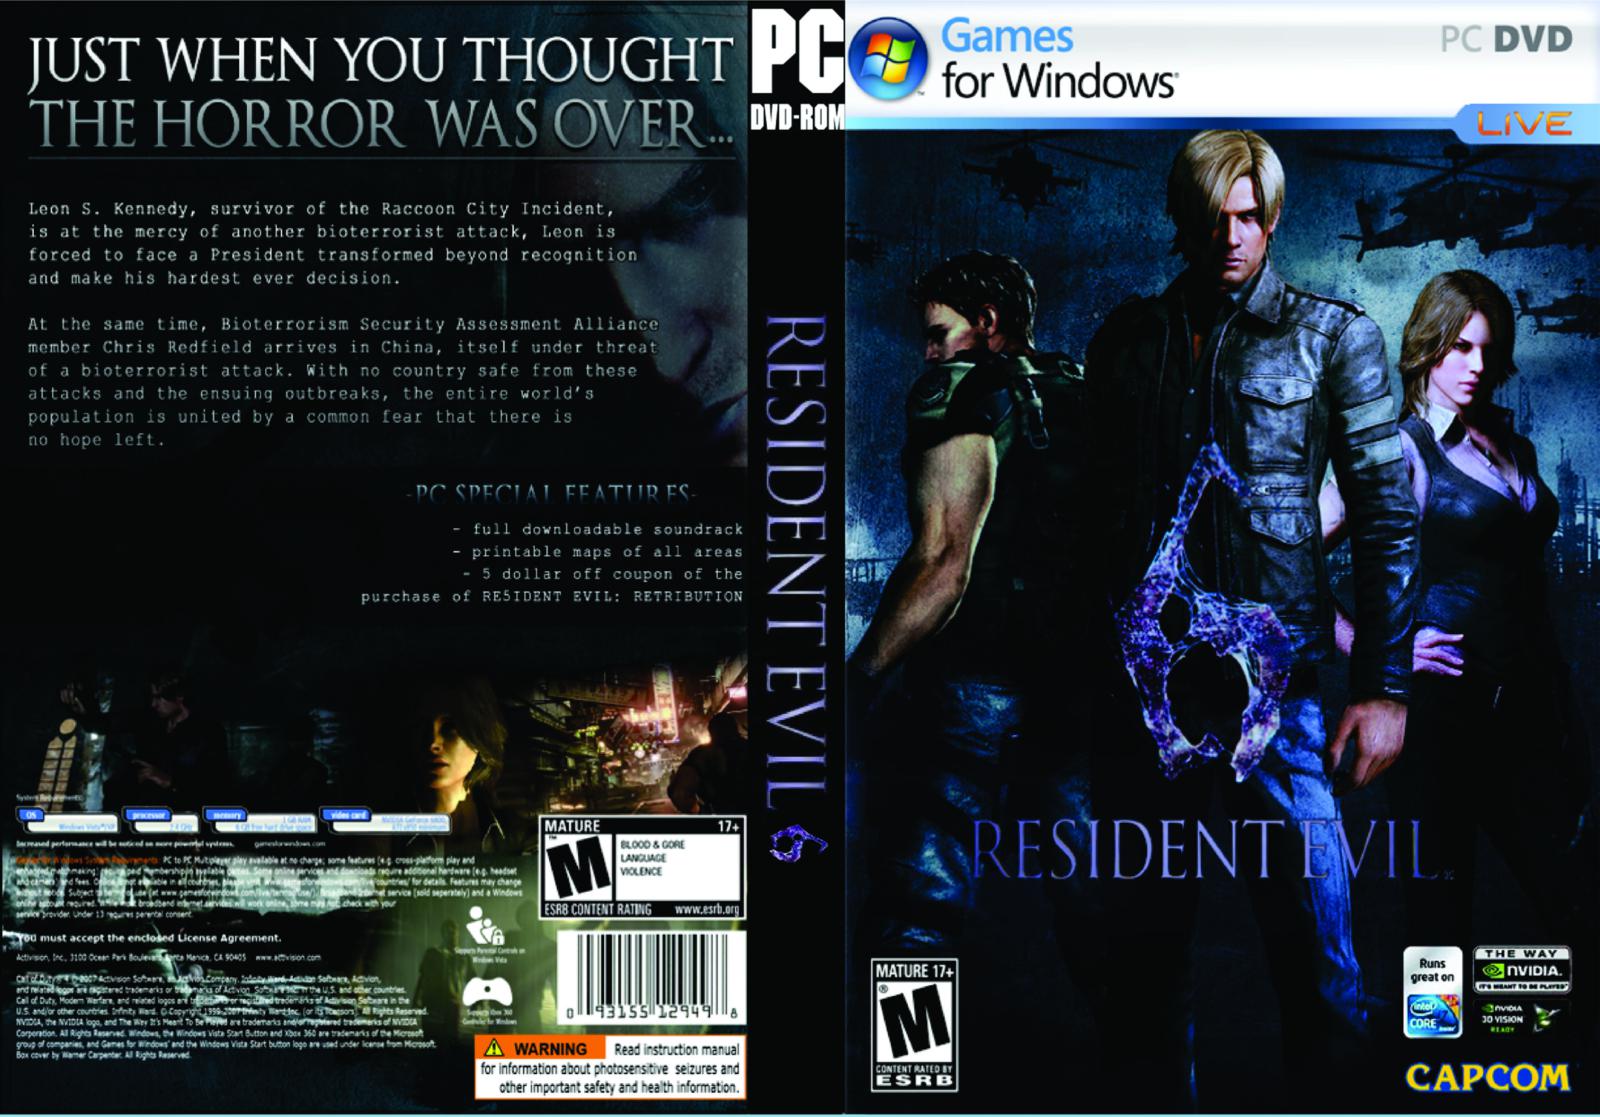 Resident Evil 6 (ISO) Xbox360